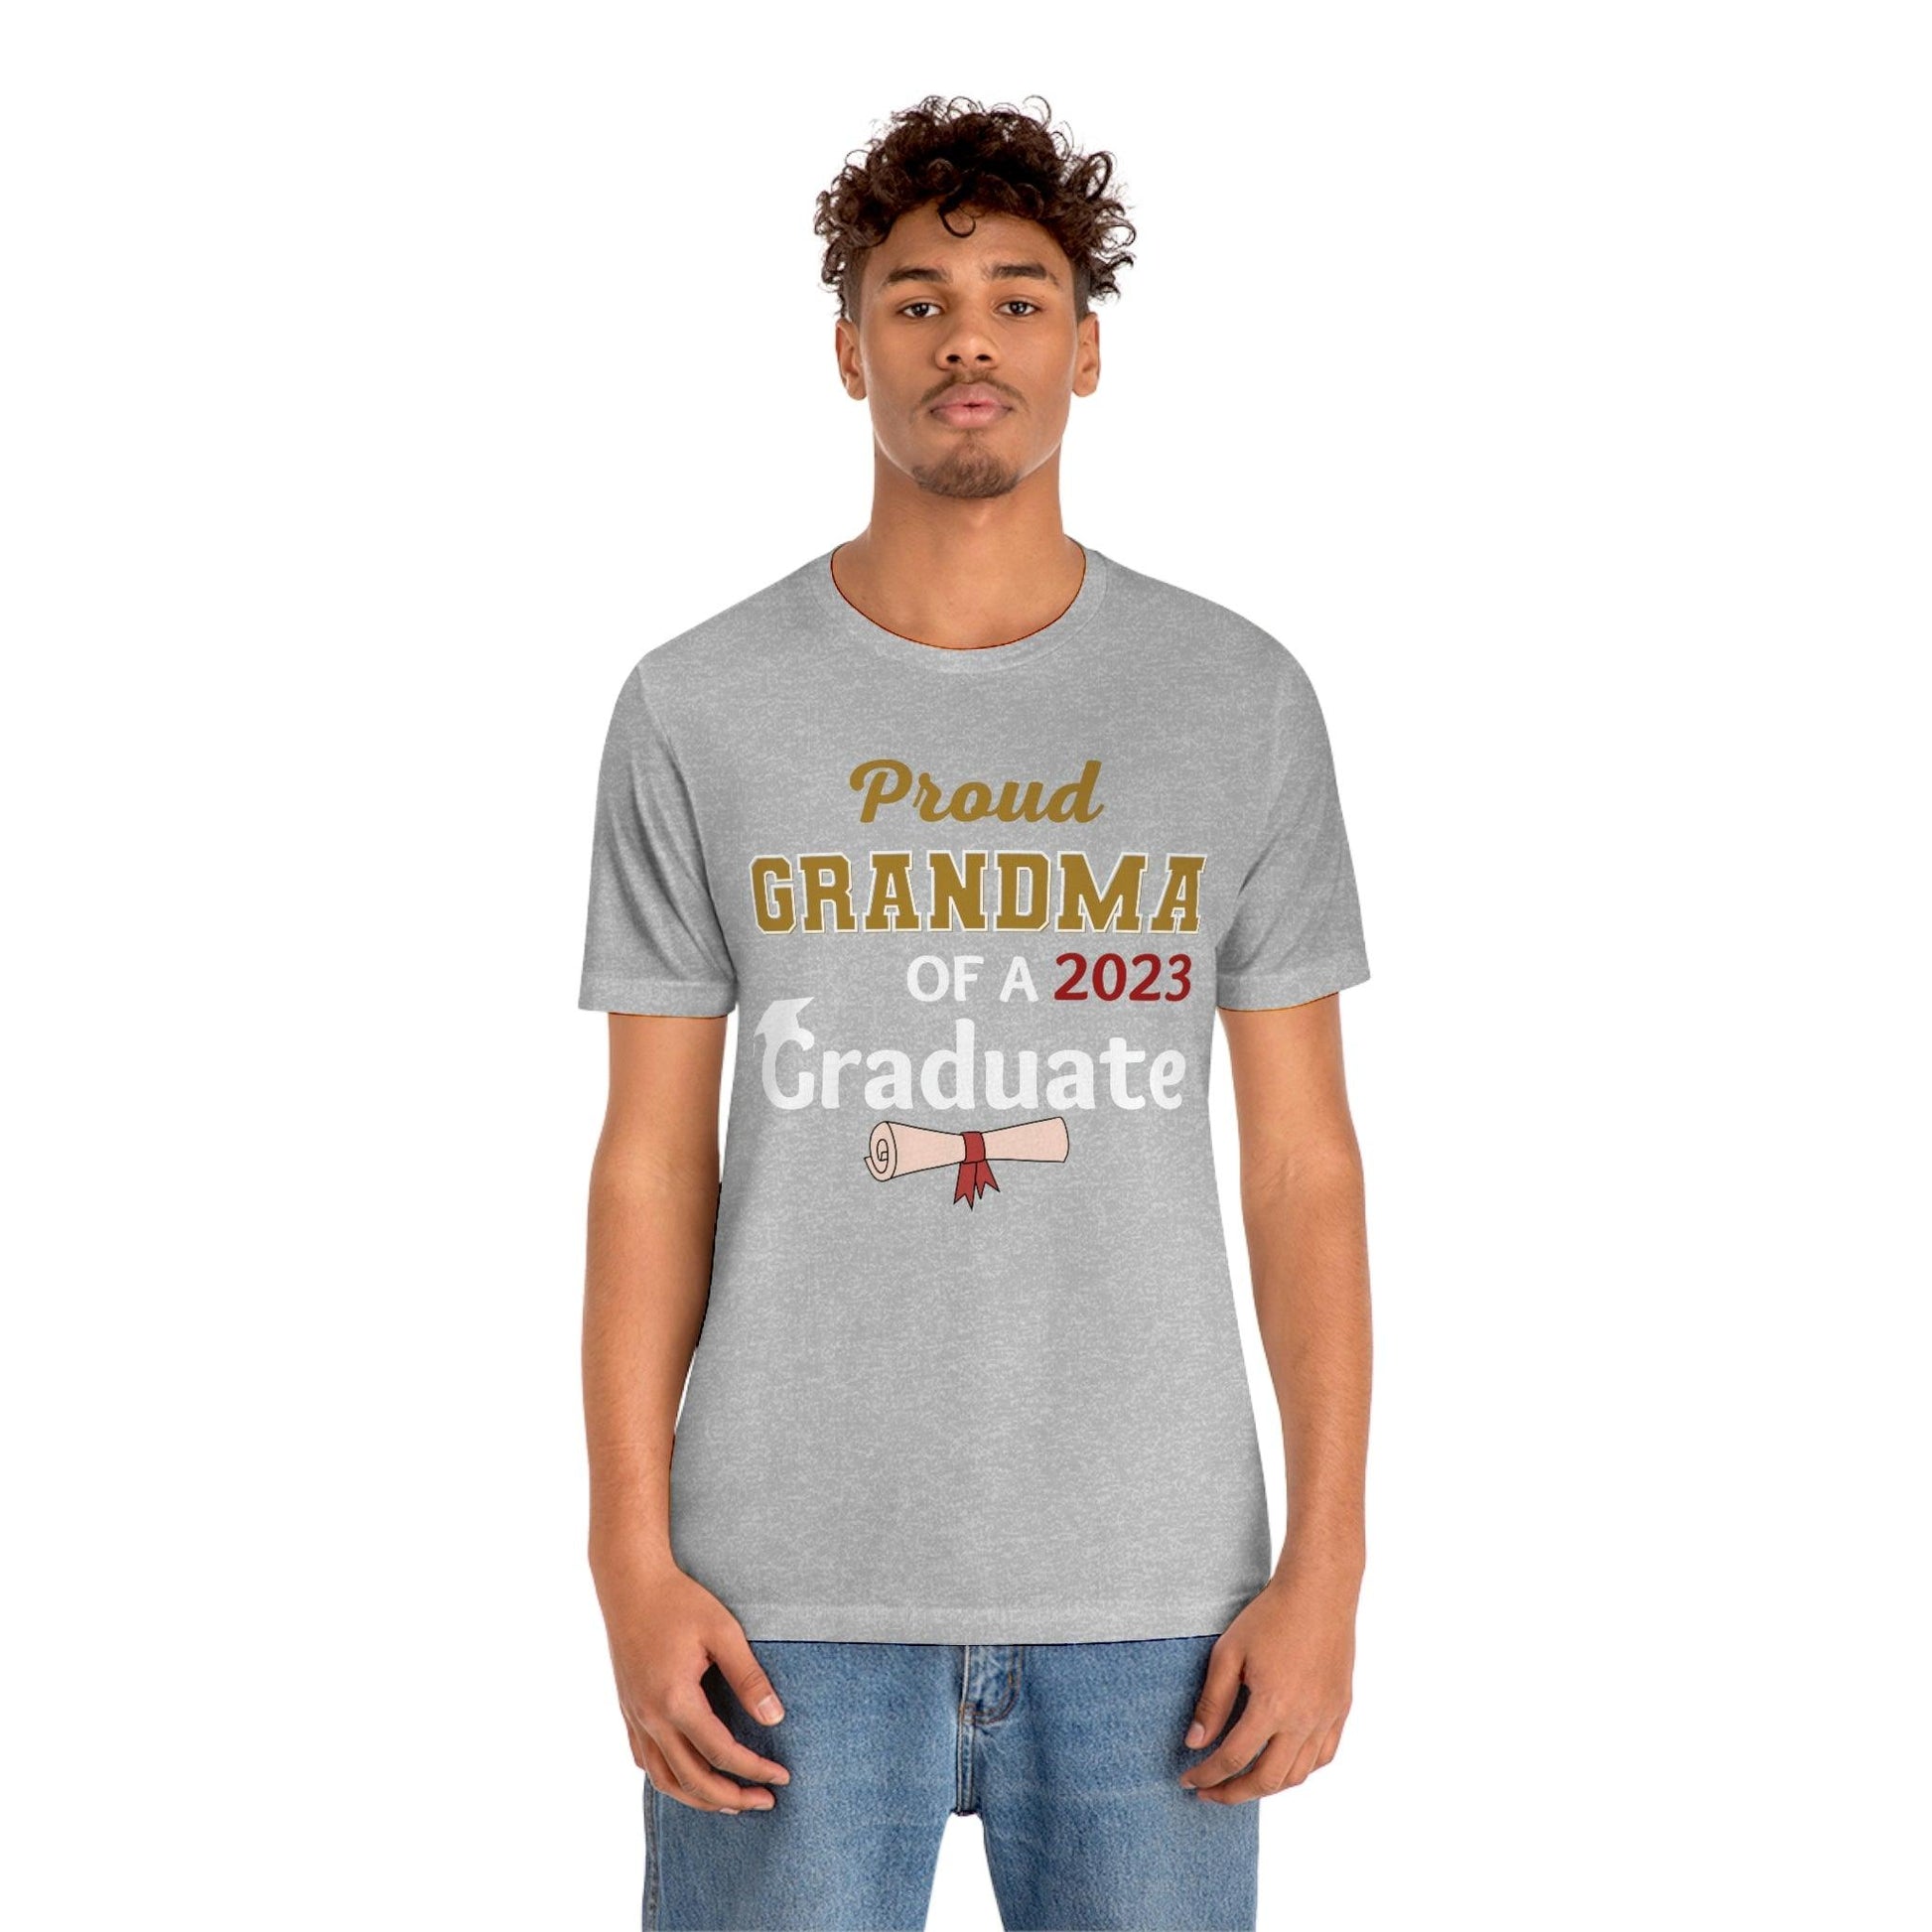 Proud Grandma of a Graduate shirt - Graduation shirt - Graduation gift - Giftsmojo